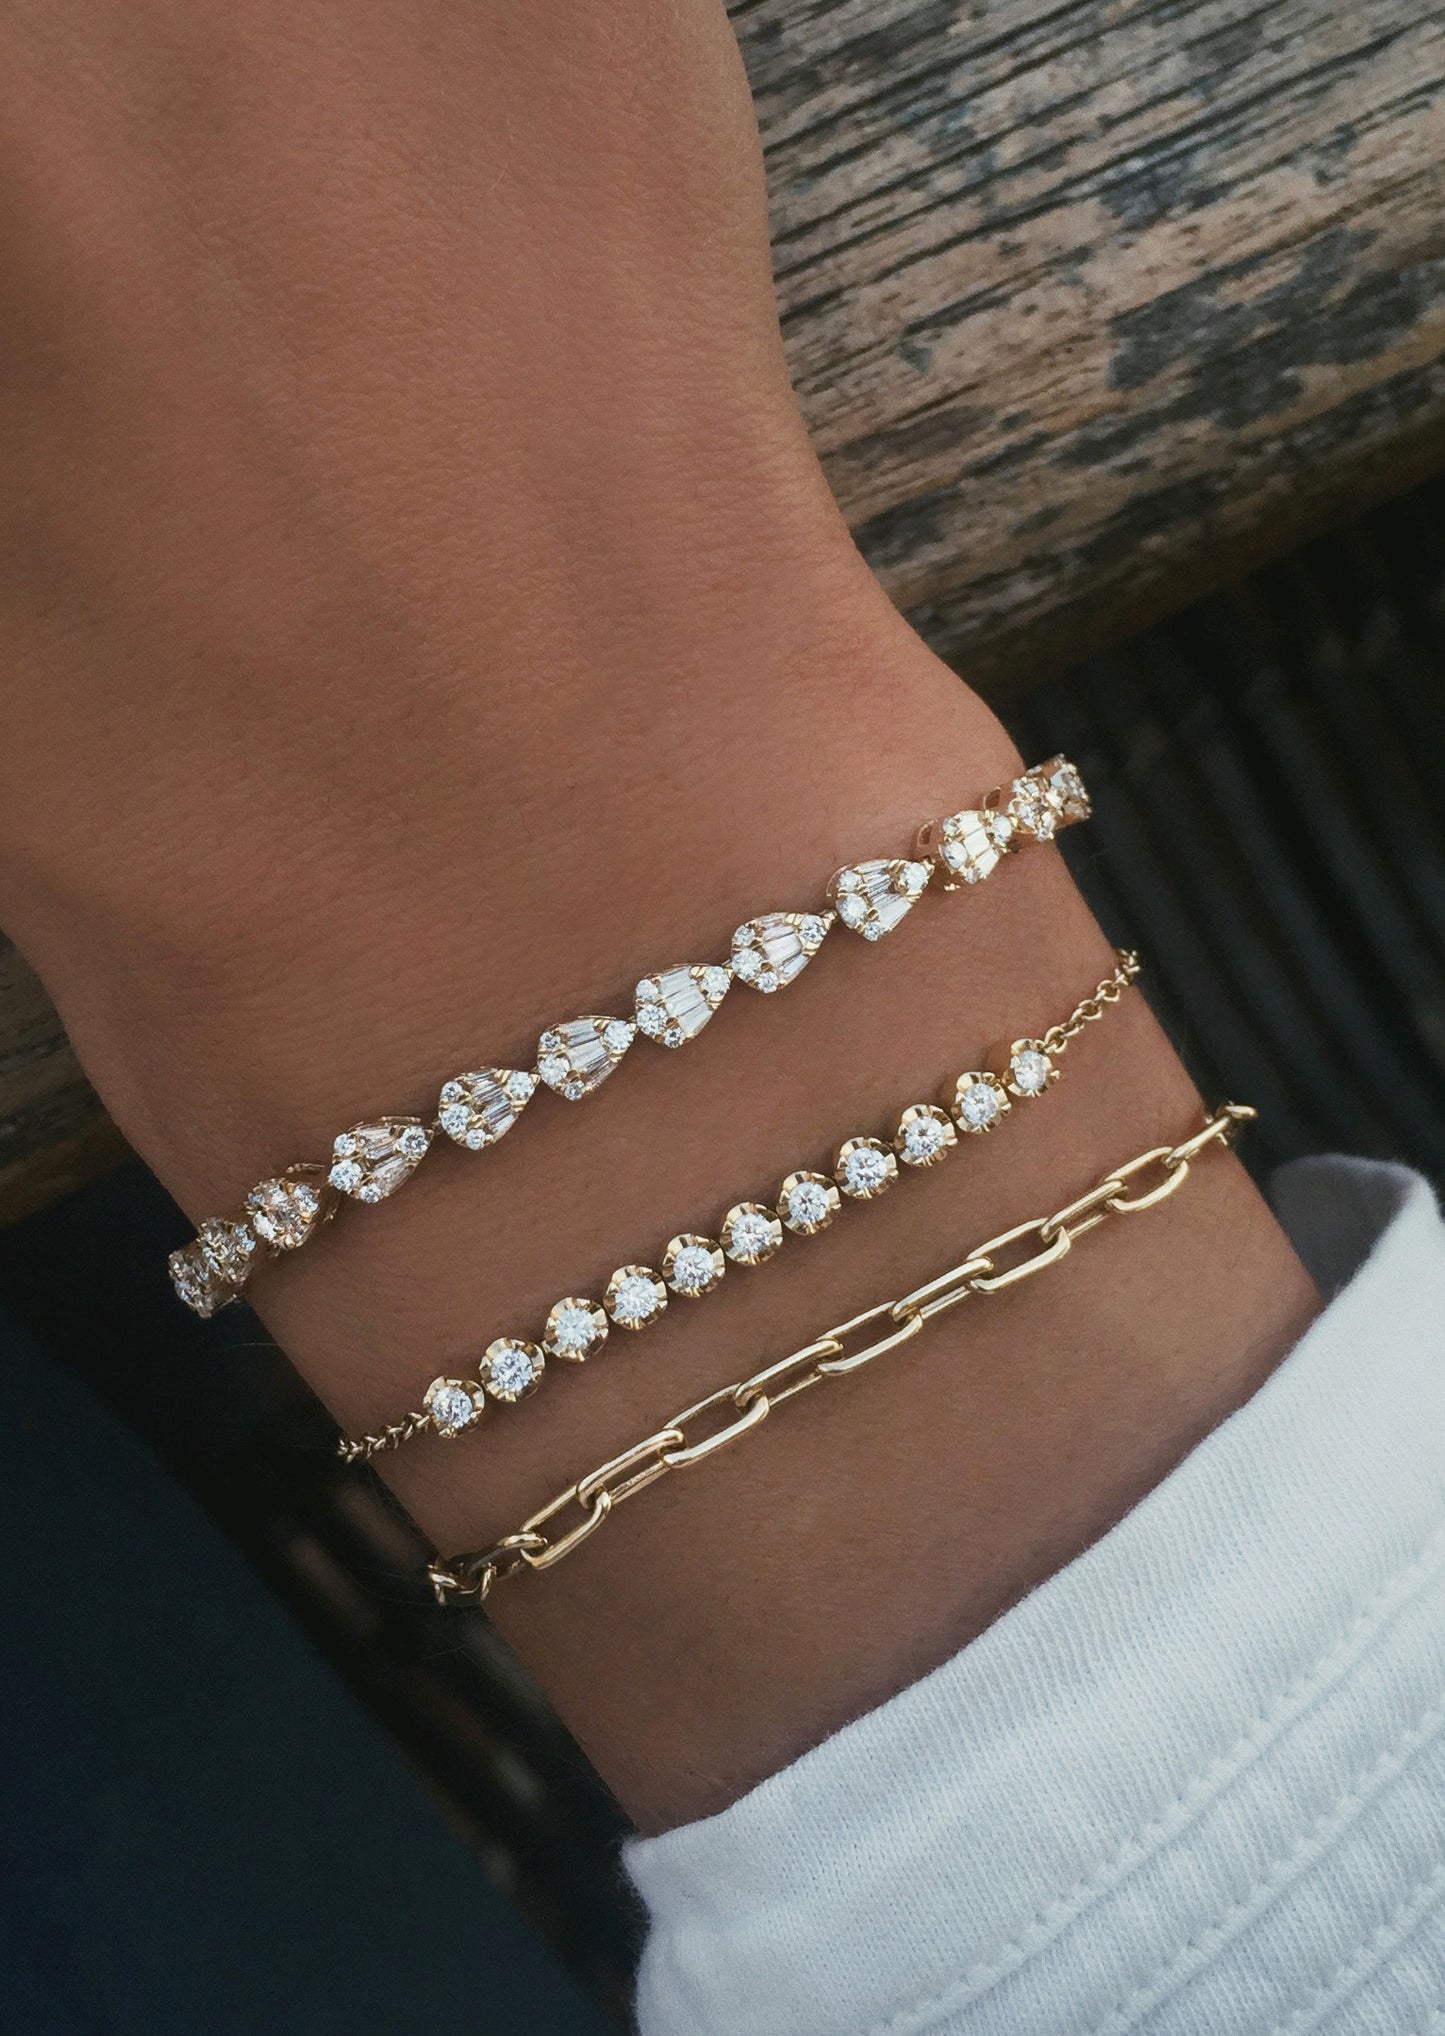 14kt gold thin paperclip chain bracelet - Luna Skye